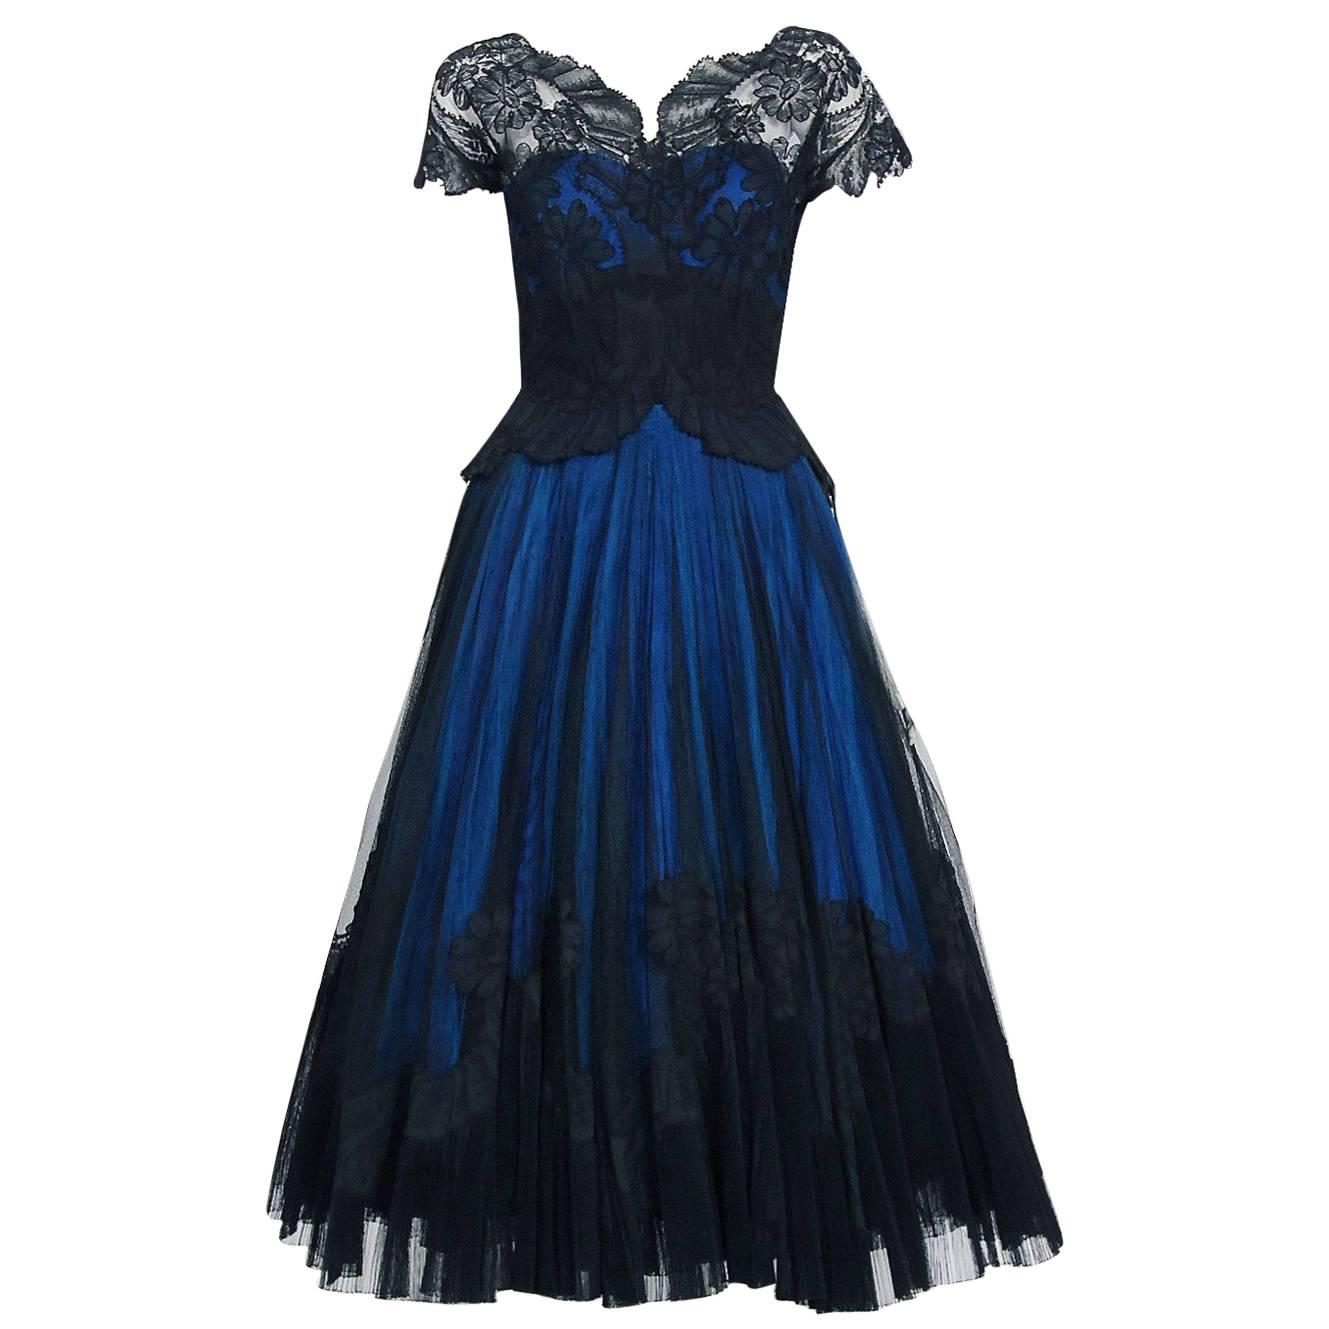 illusion black and blue dress